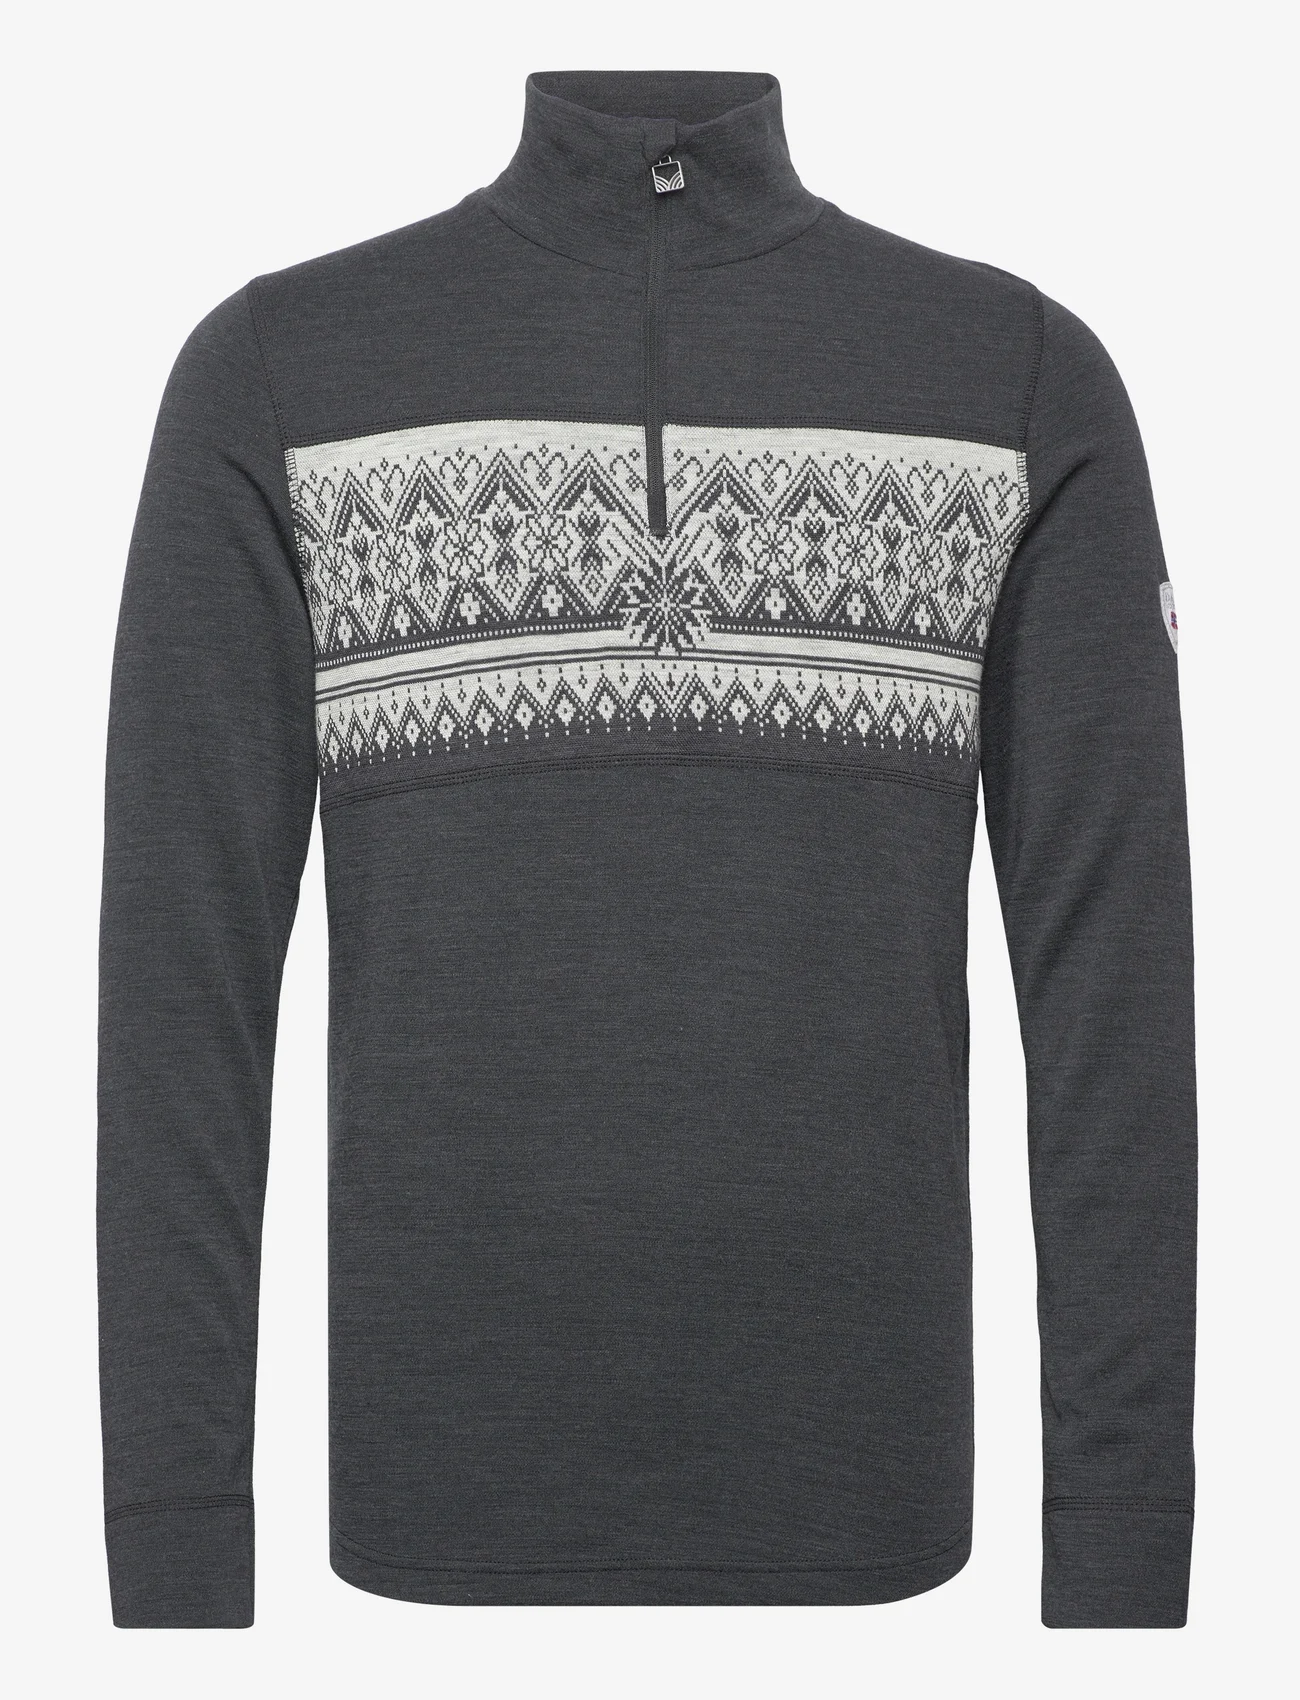 Dale of Norway - Moritz Masc Basic Sweater - svetarit - k - 0